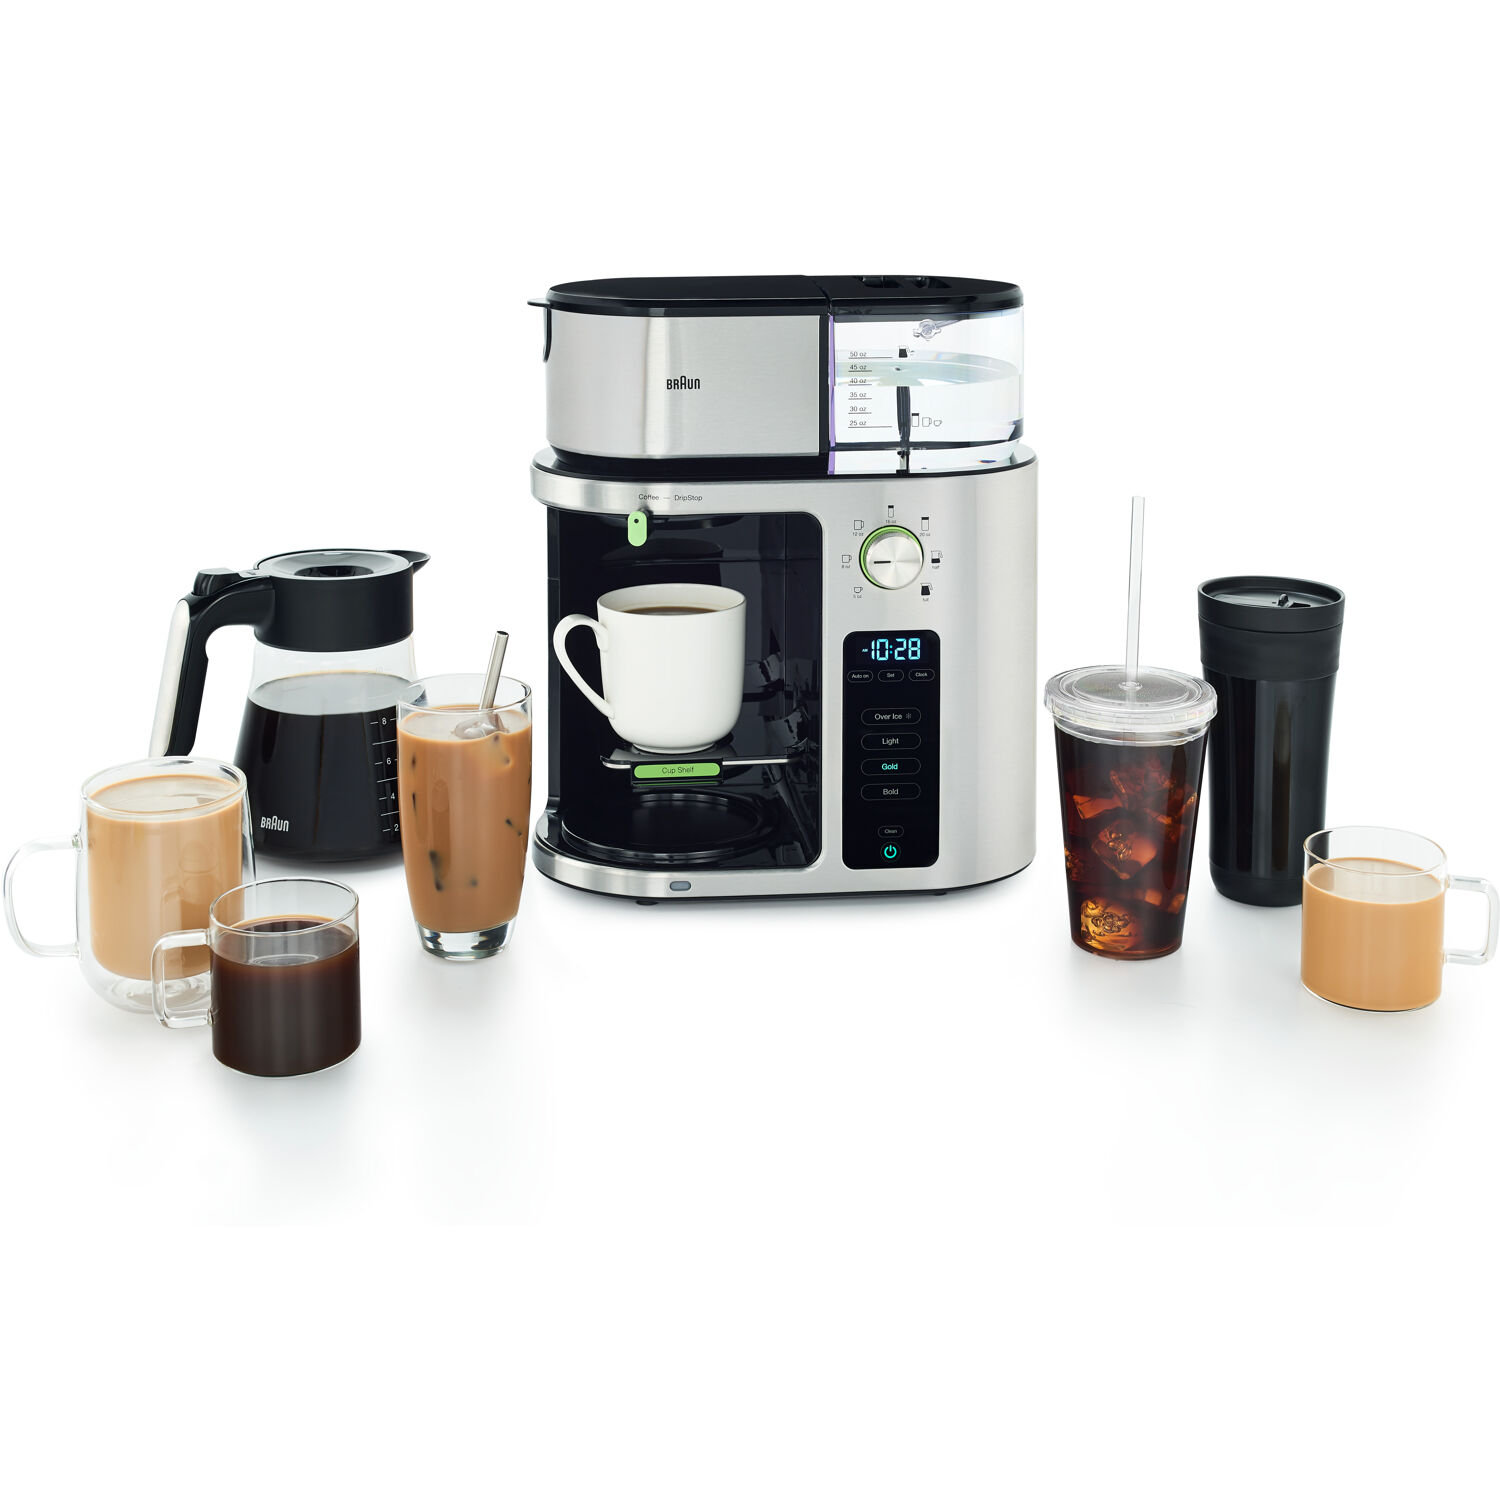 Braun Multiserve Drip Coffee Maker - Kf9050 - Target Certified